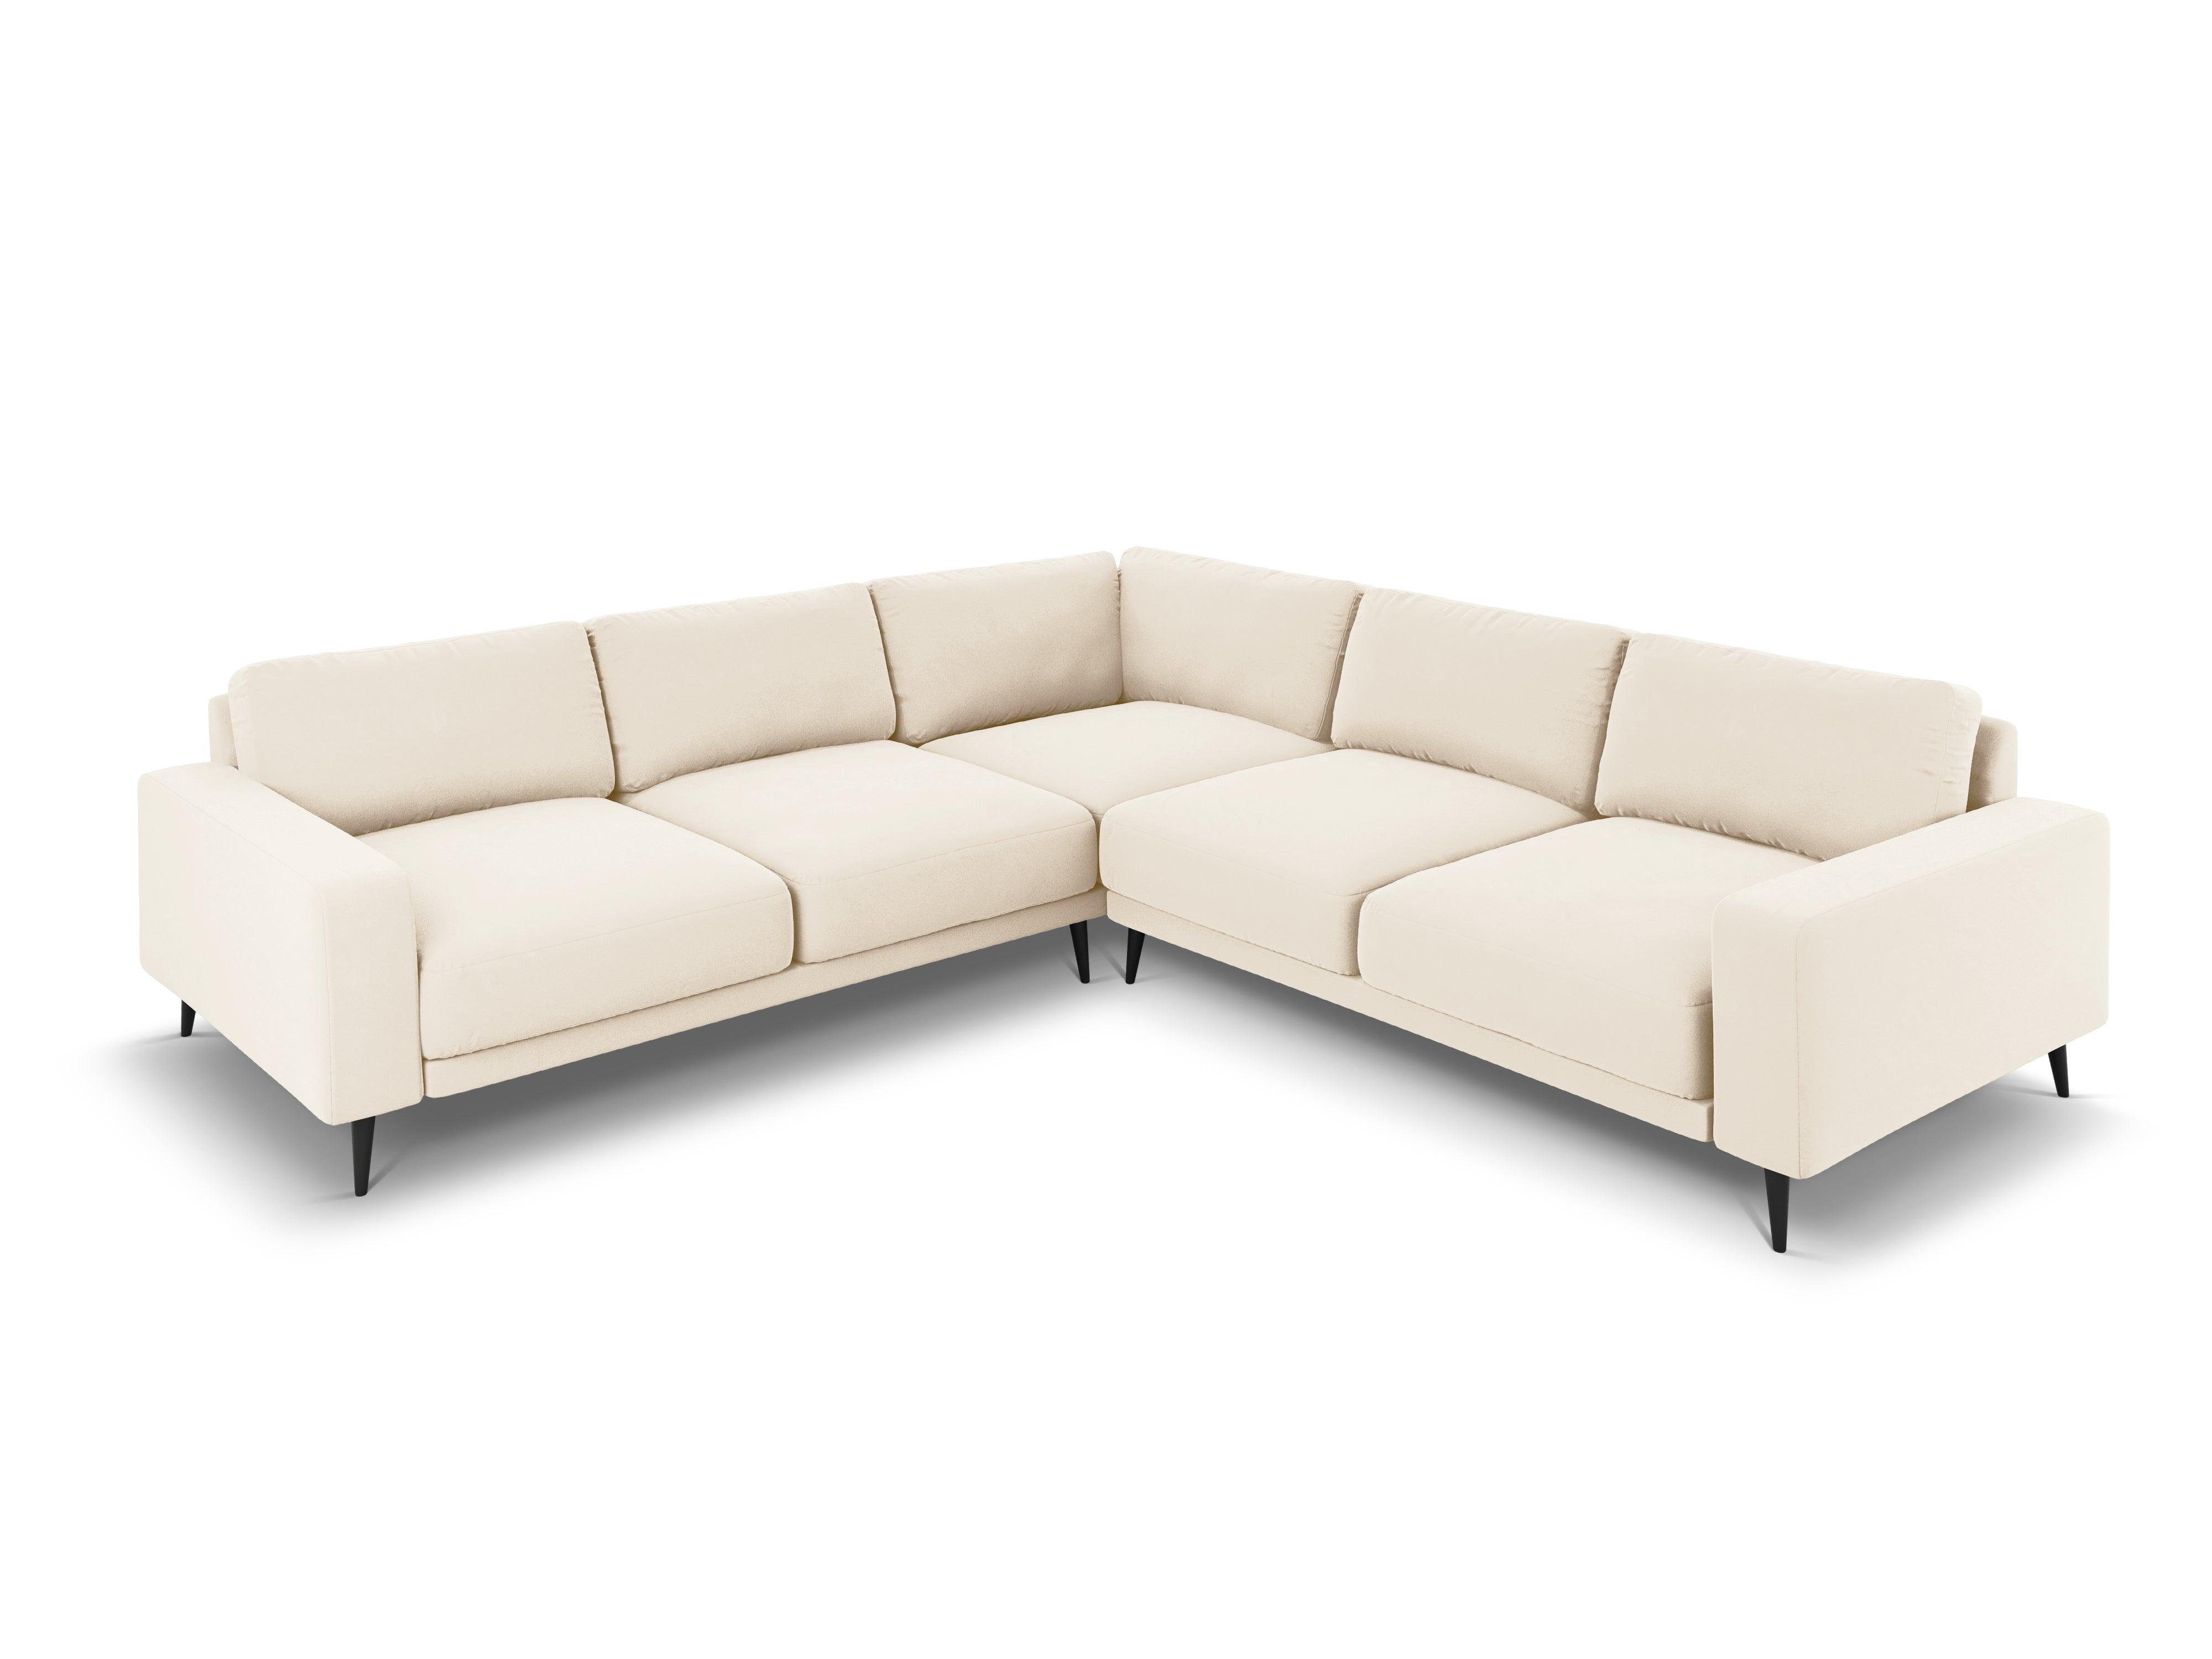 Velvet Reversible Corner Sofa, "Kylie", 5 Seats, 236x236x80
Made in Europe, Micadoni, Eye on Design